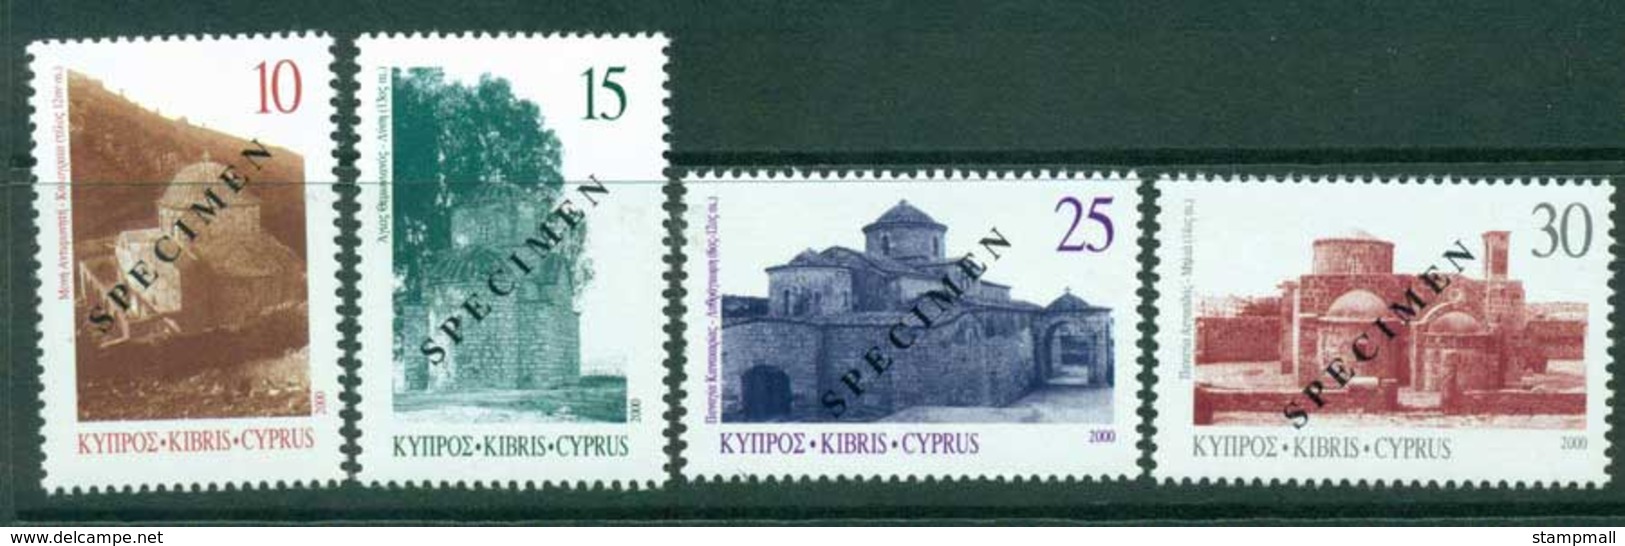 Cyprus 2002 Churches Damaged Under Turkish Occupation SPECIMEN MUH Lot23556 - Unused Stamps